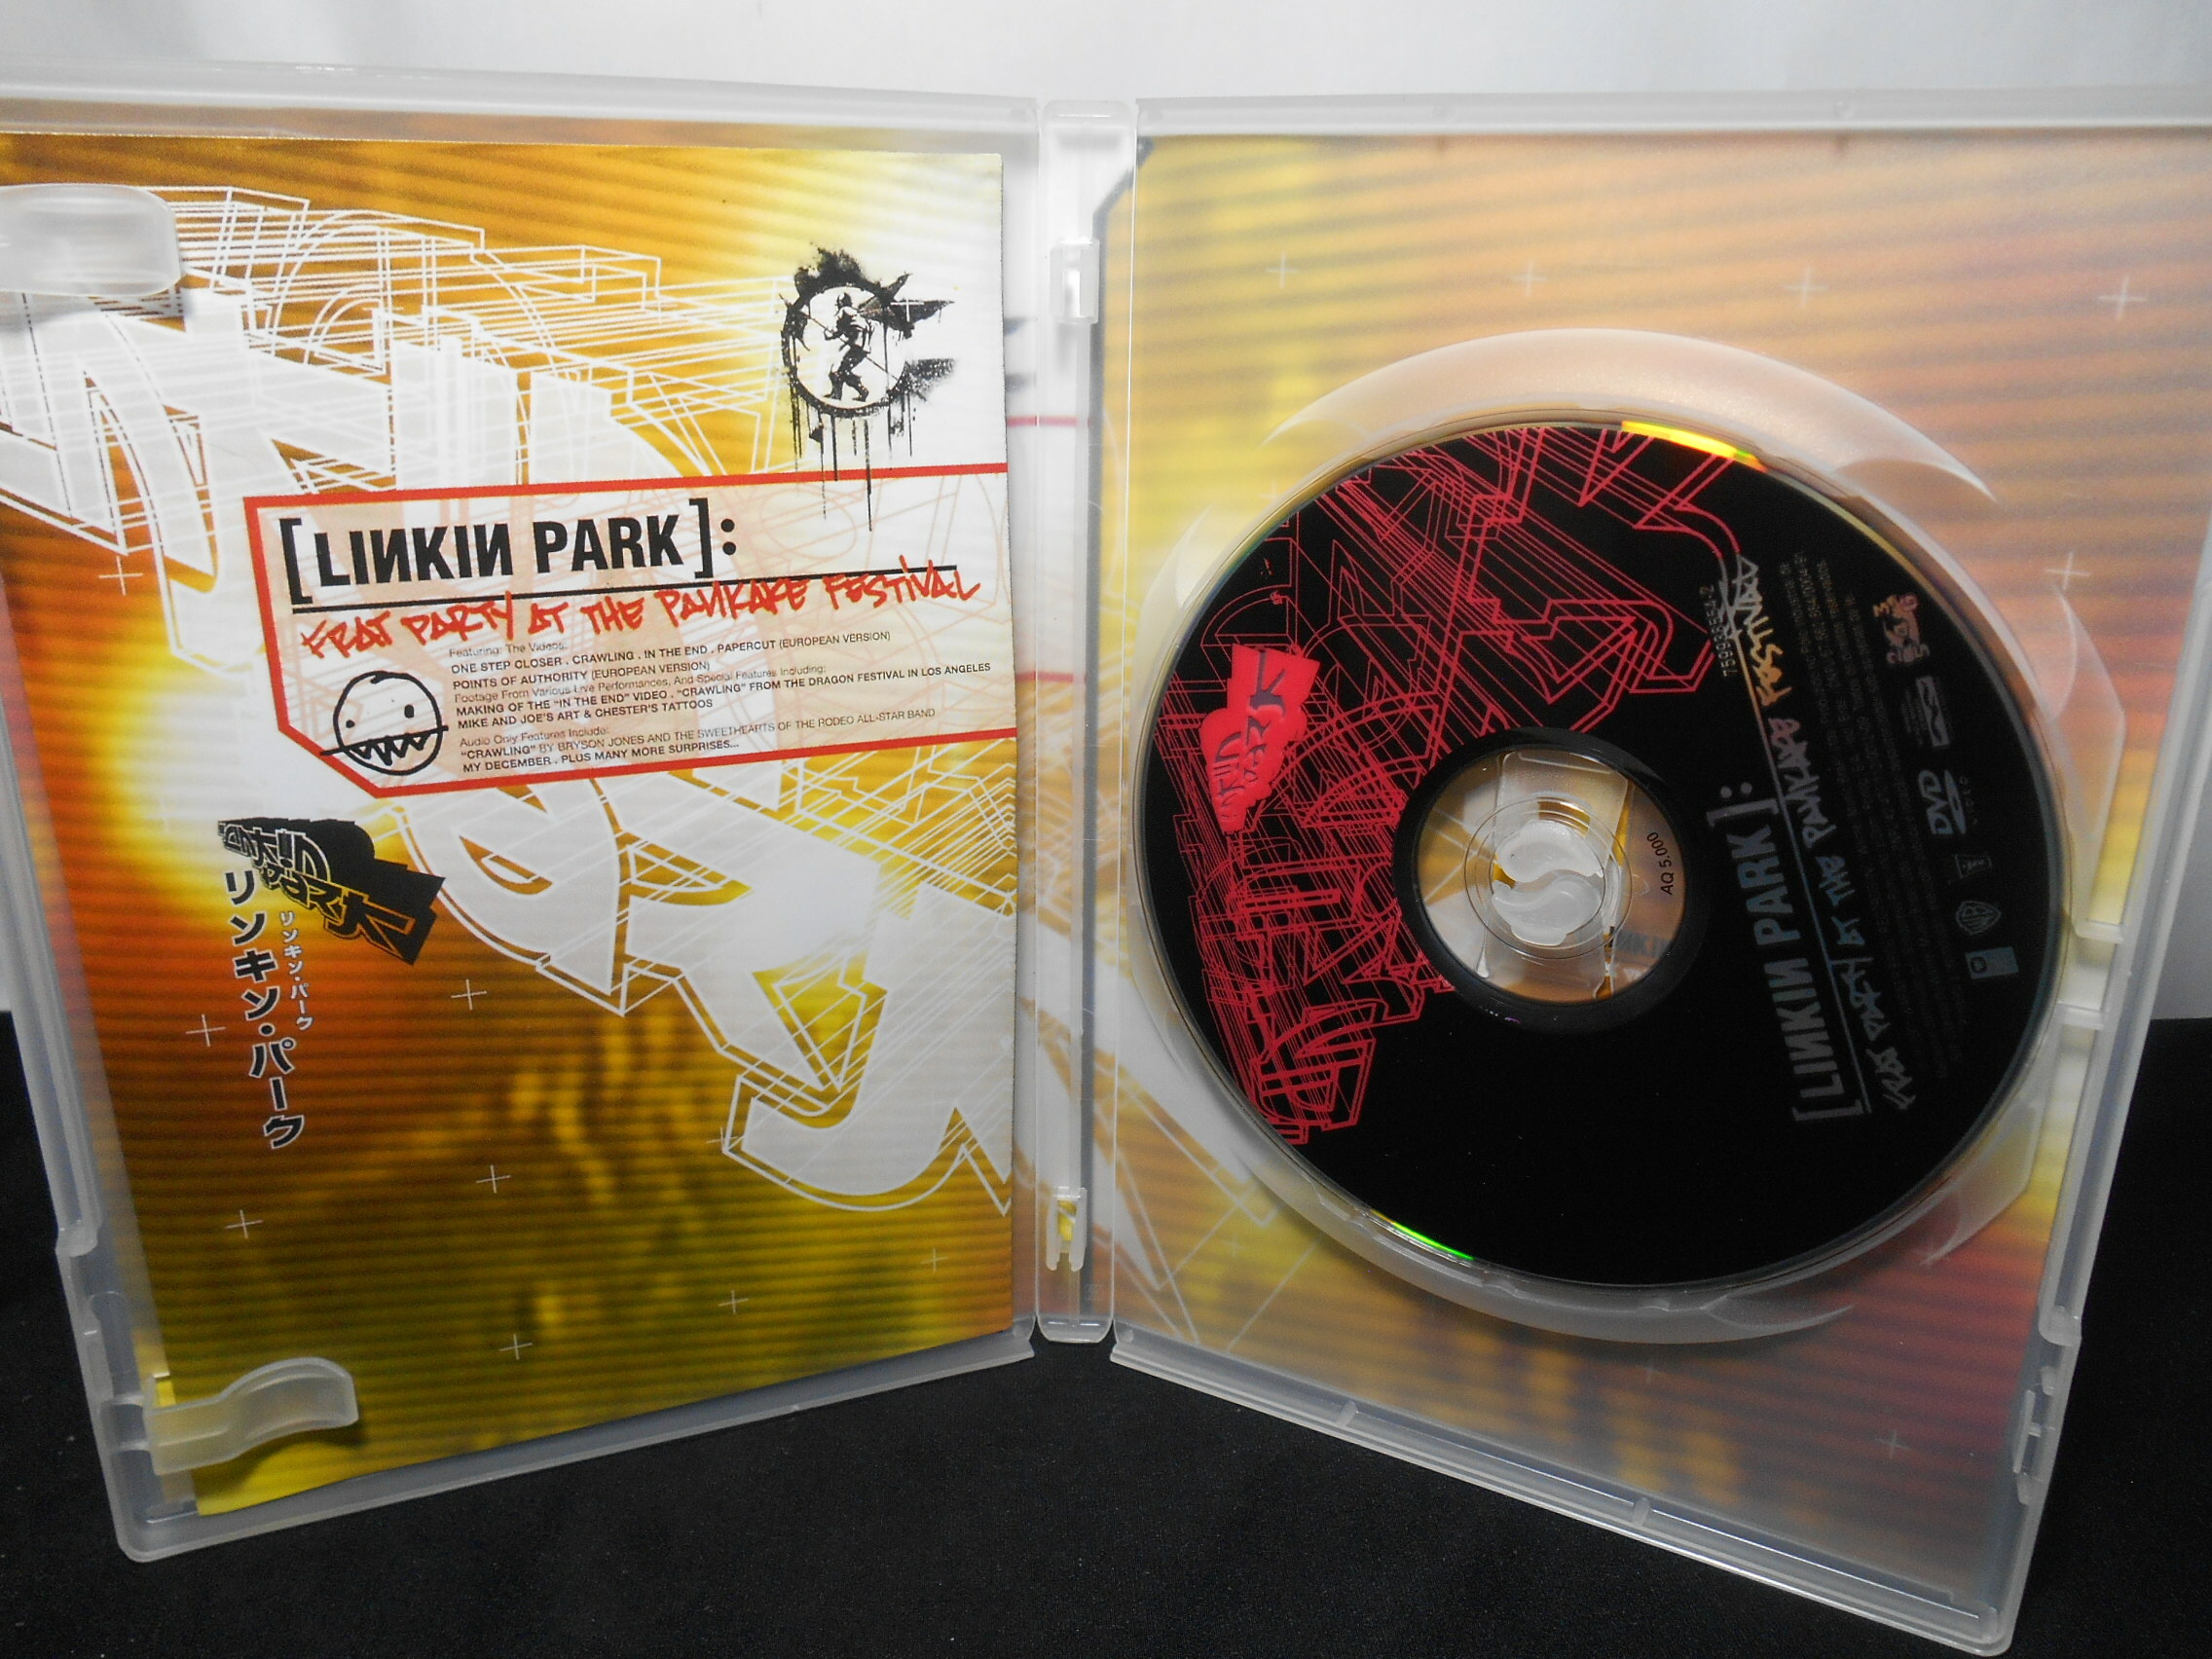 DVD - Linkin Park - Frat Party At The Pankake Festival